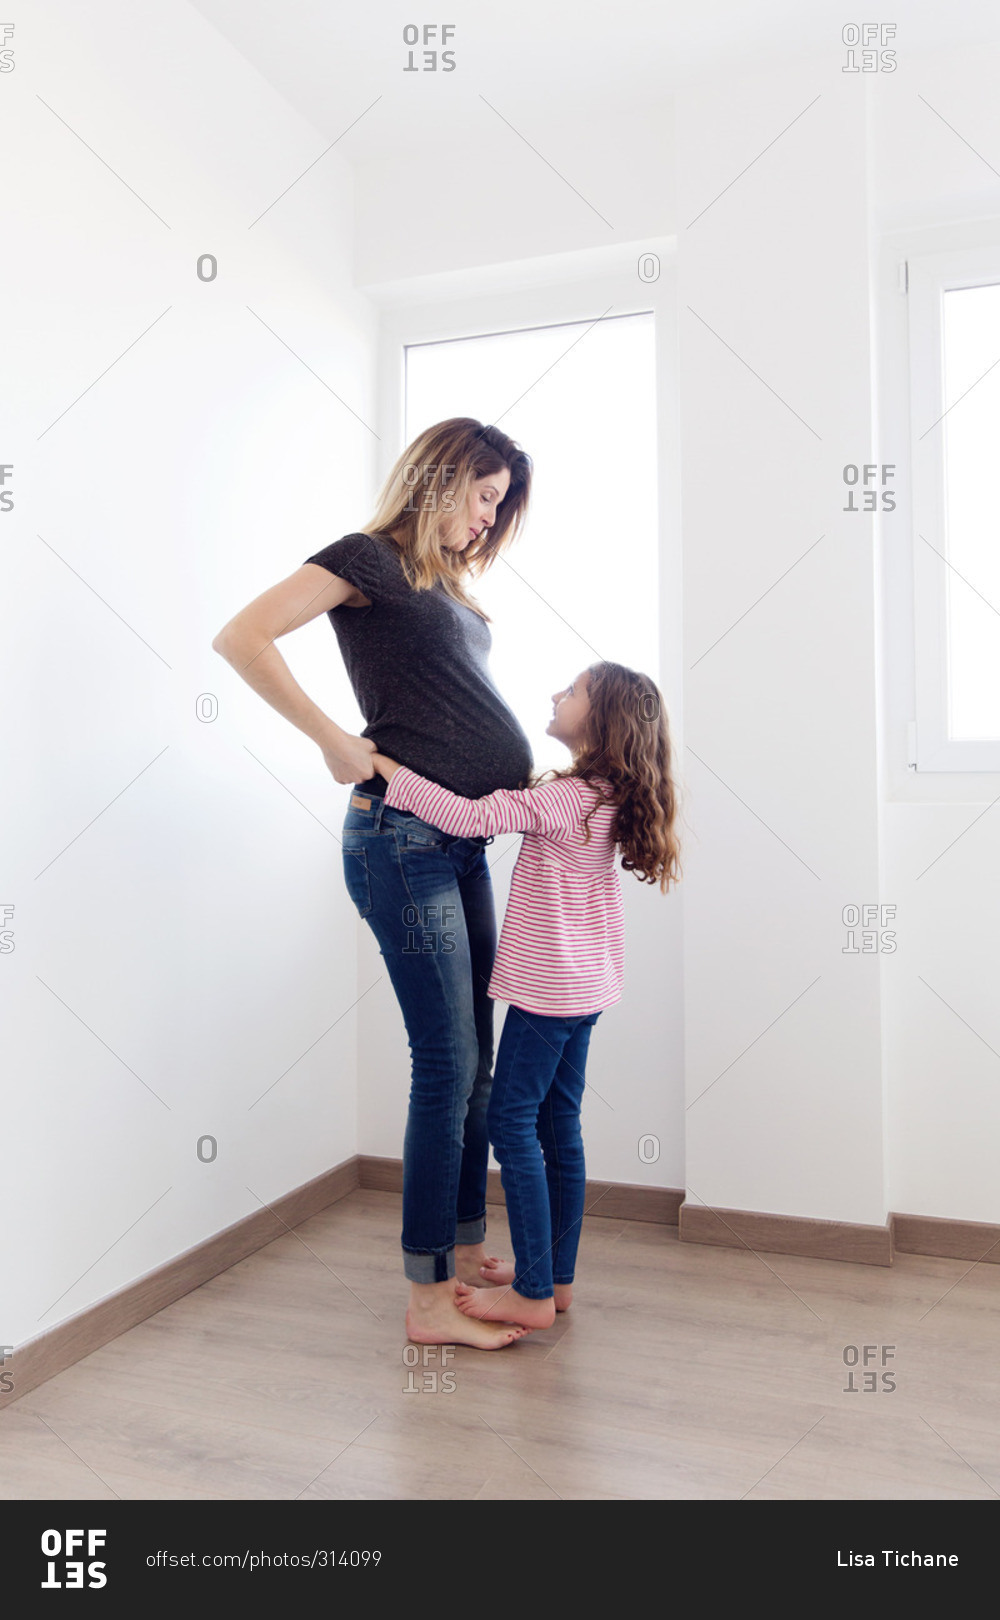 Daughter hugging her pregnant mother in corner of white room